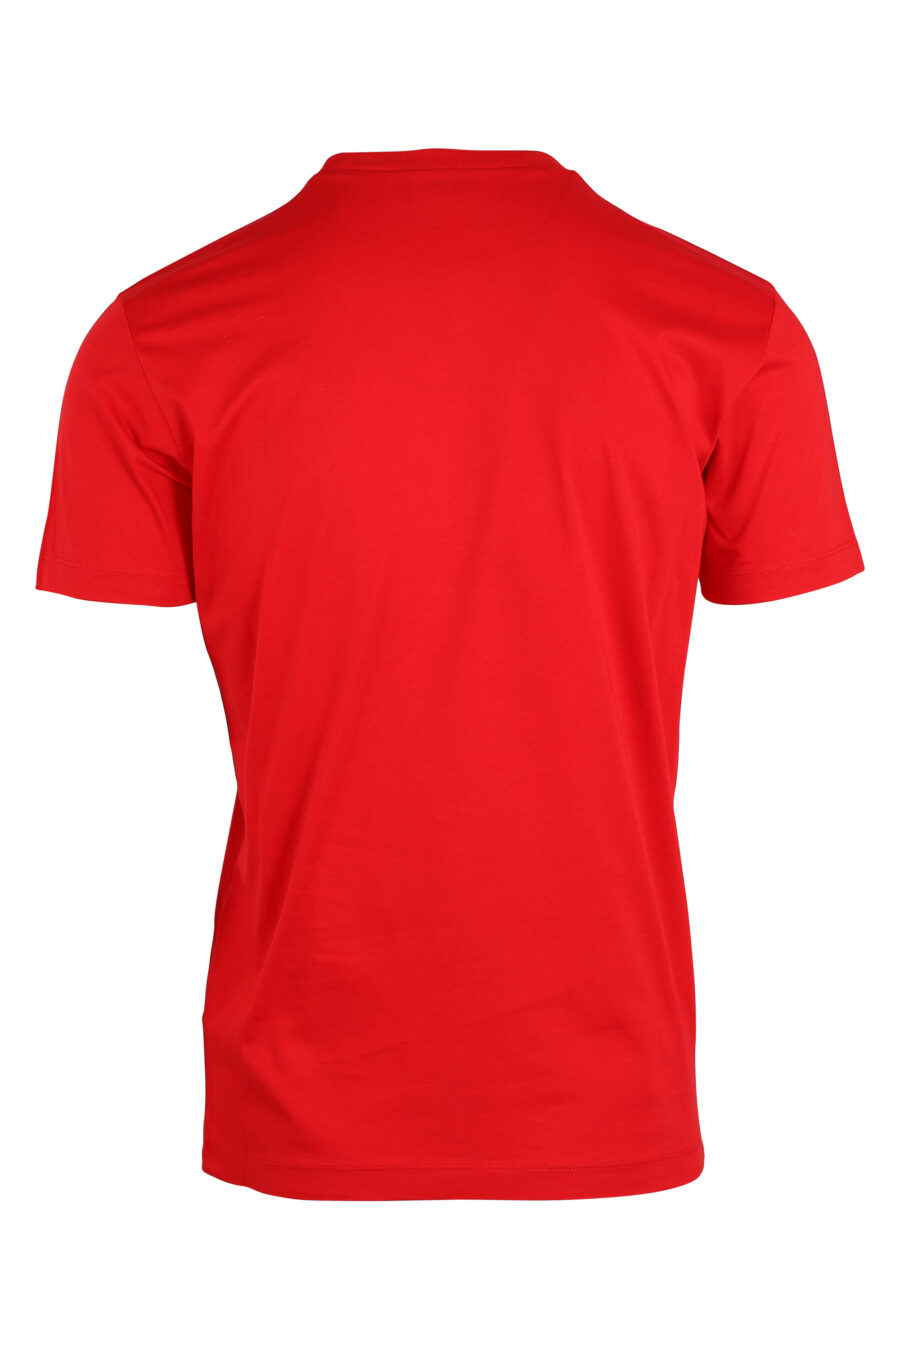 Camiseta roja con maxilogo "i can't" - IMG 0640